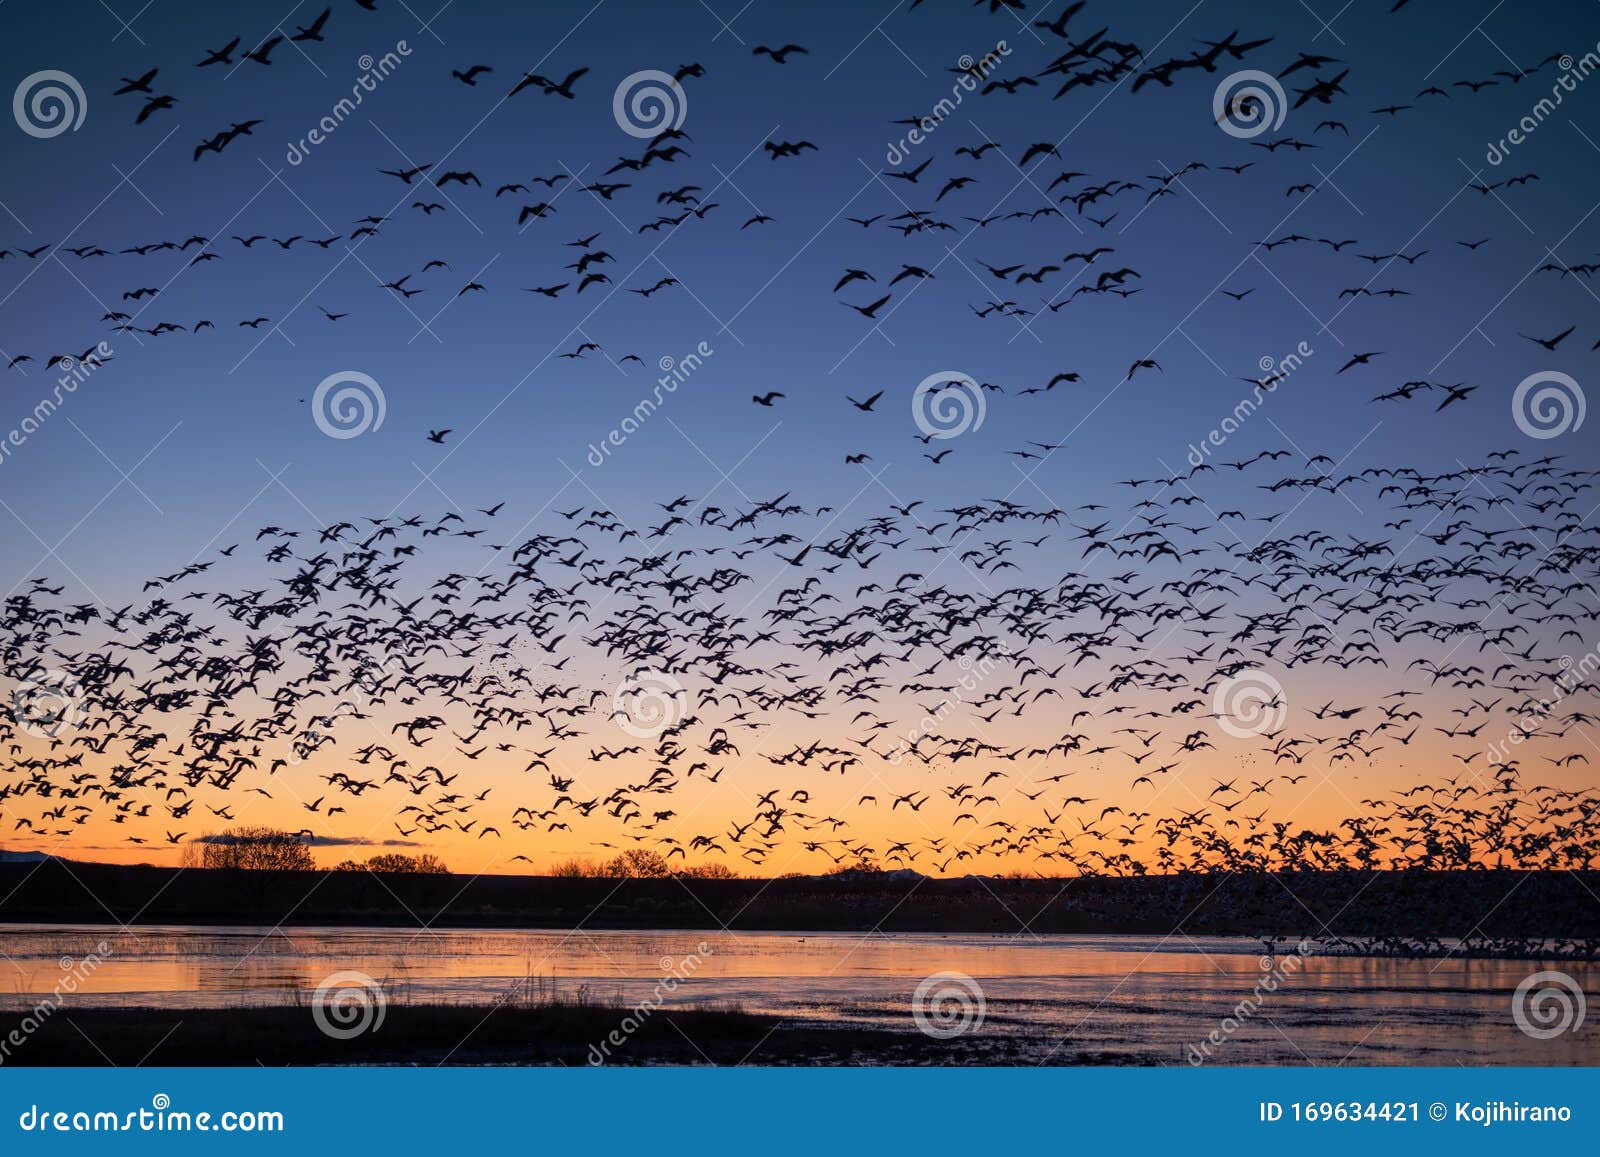 snow geese blast off at sunrise